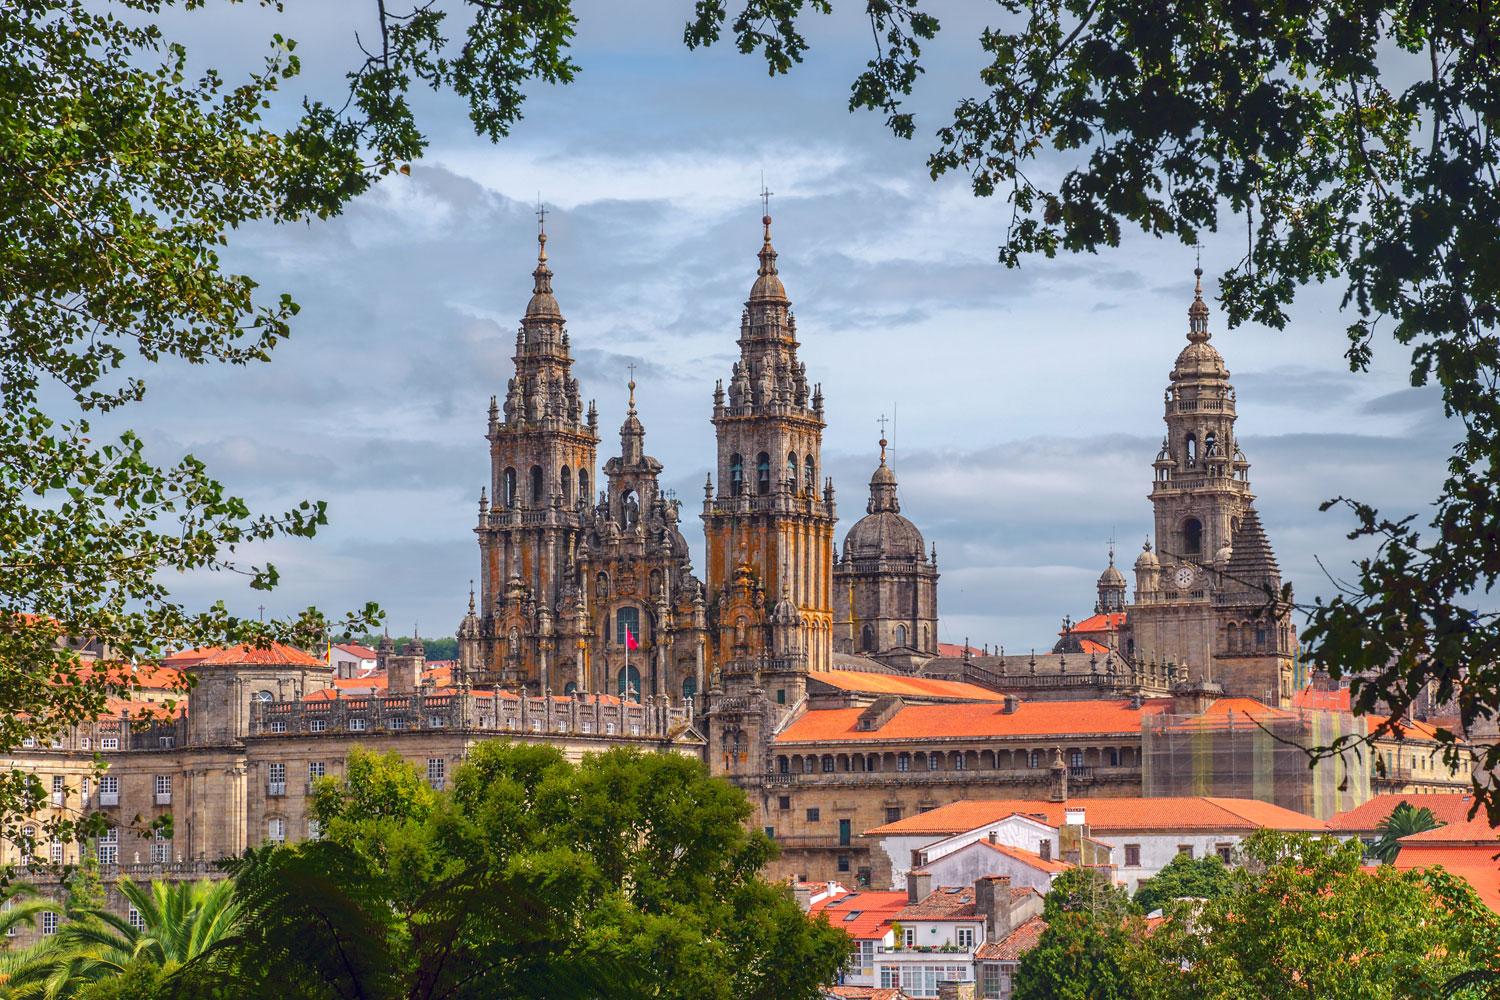 Catedral_de_Santiago_de_Compostela